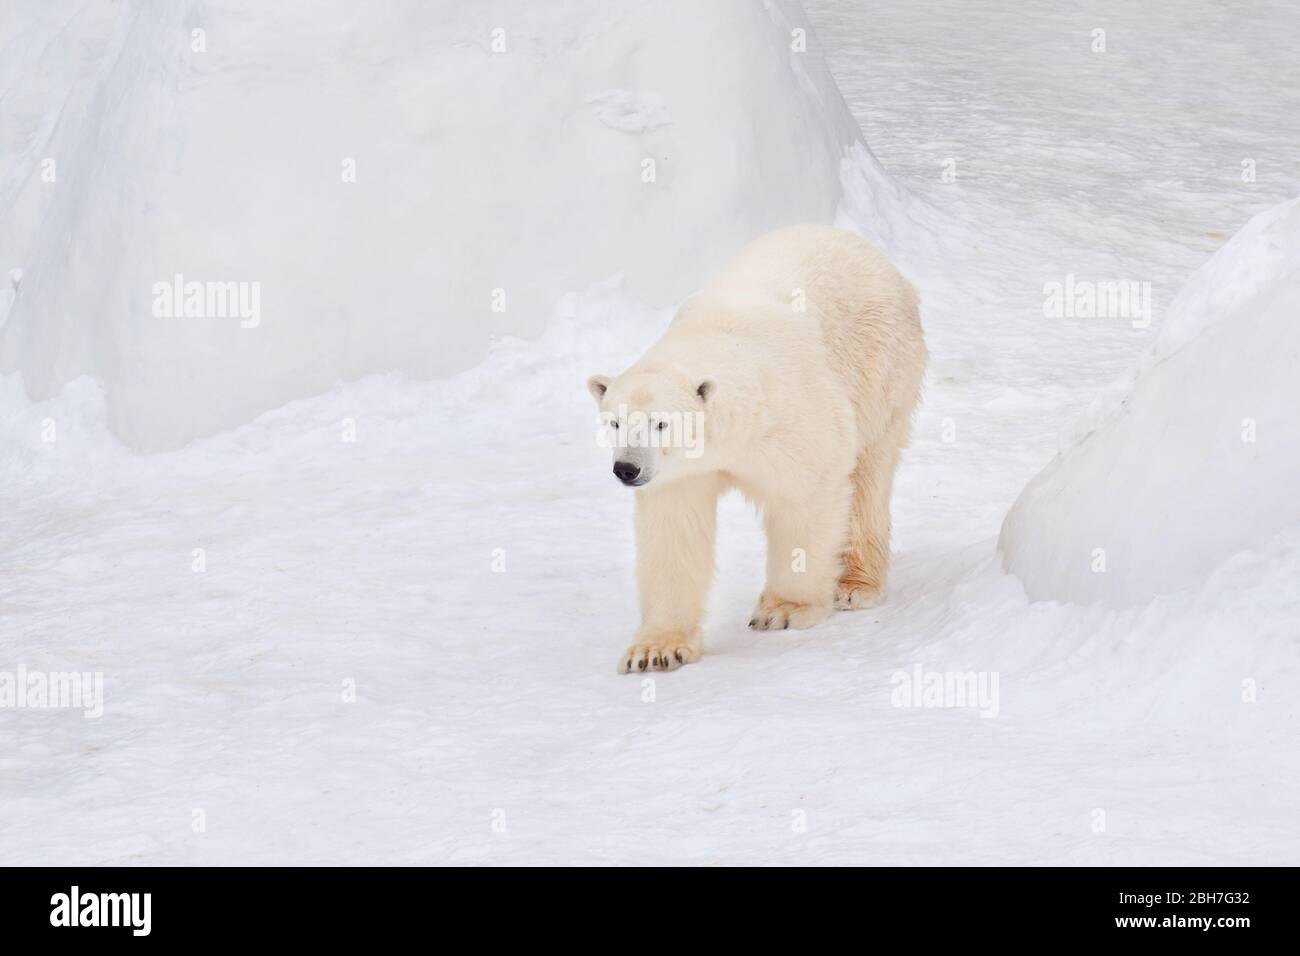 Large arctic bear is walking on white snow. Ursus maritimus or Thalarctos Maritimus. Animals in wildlife. Stock Photo